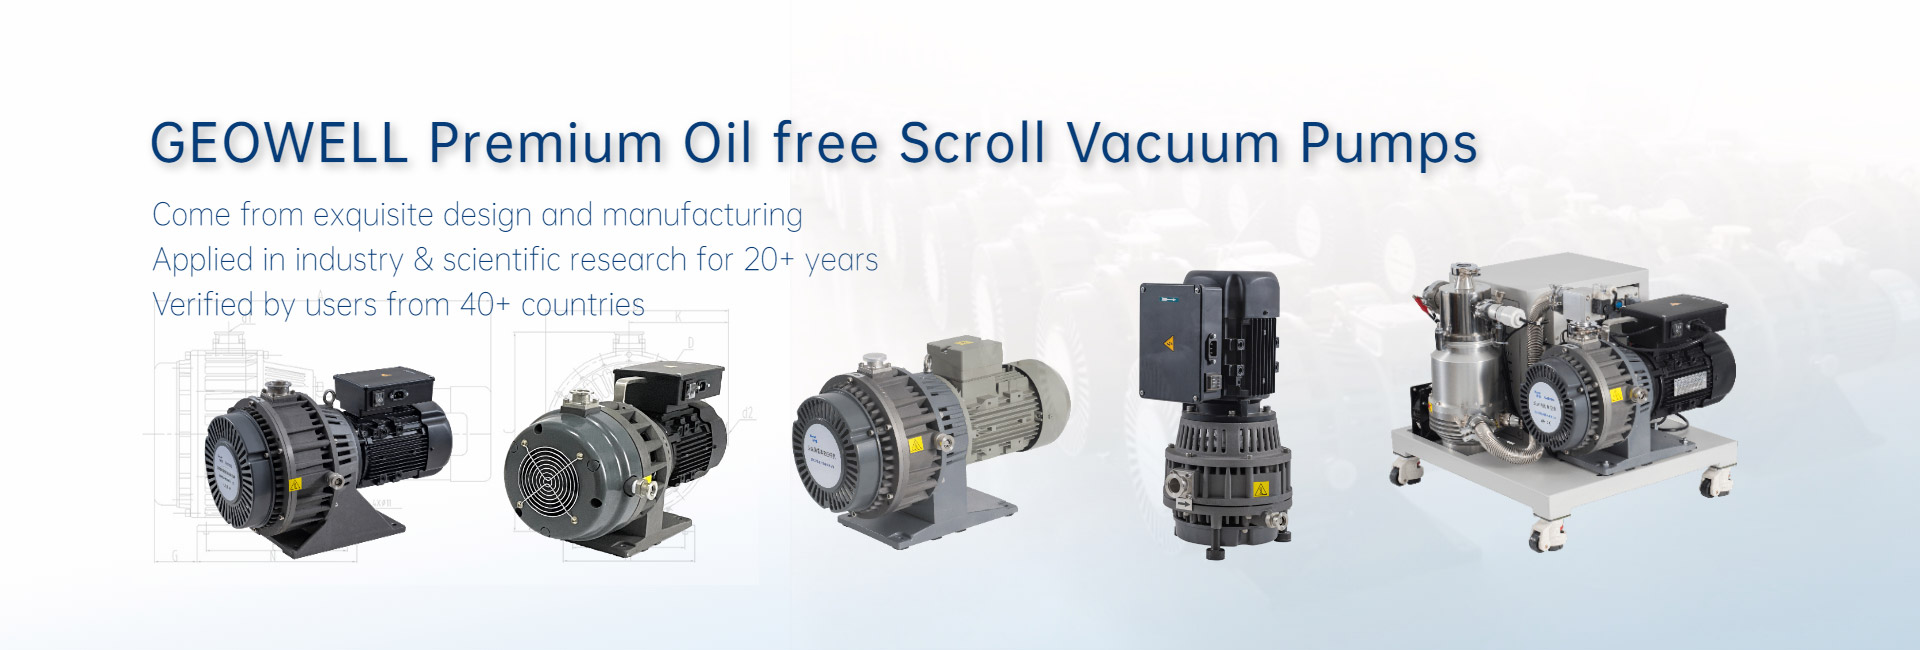 Full series dry scroll vacuum pumps